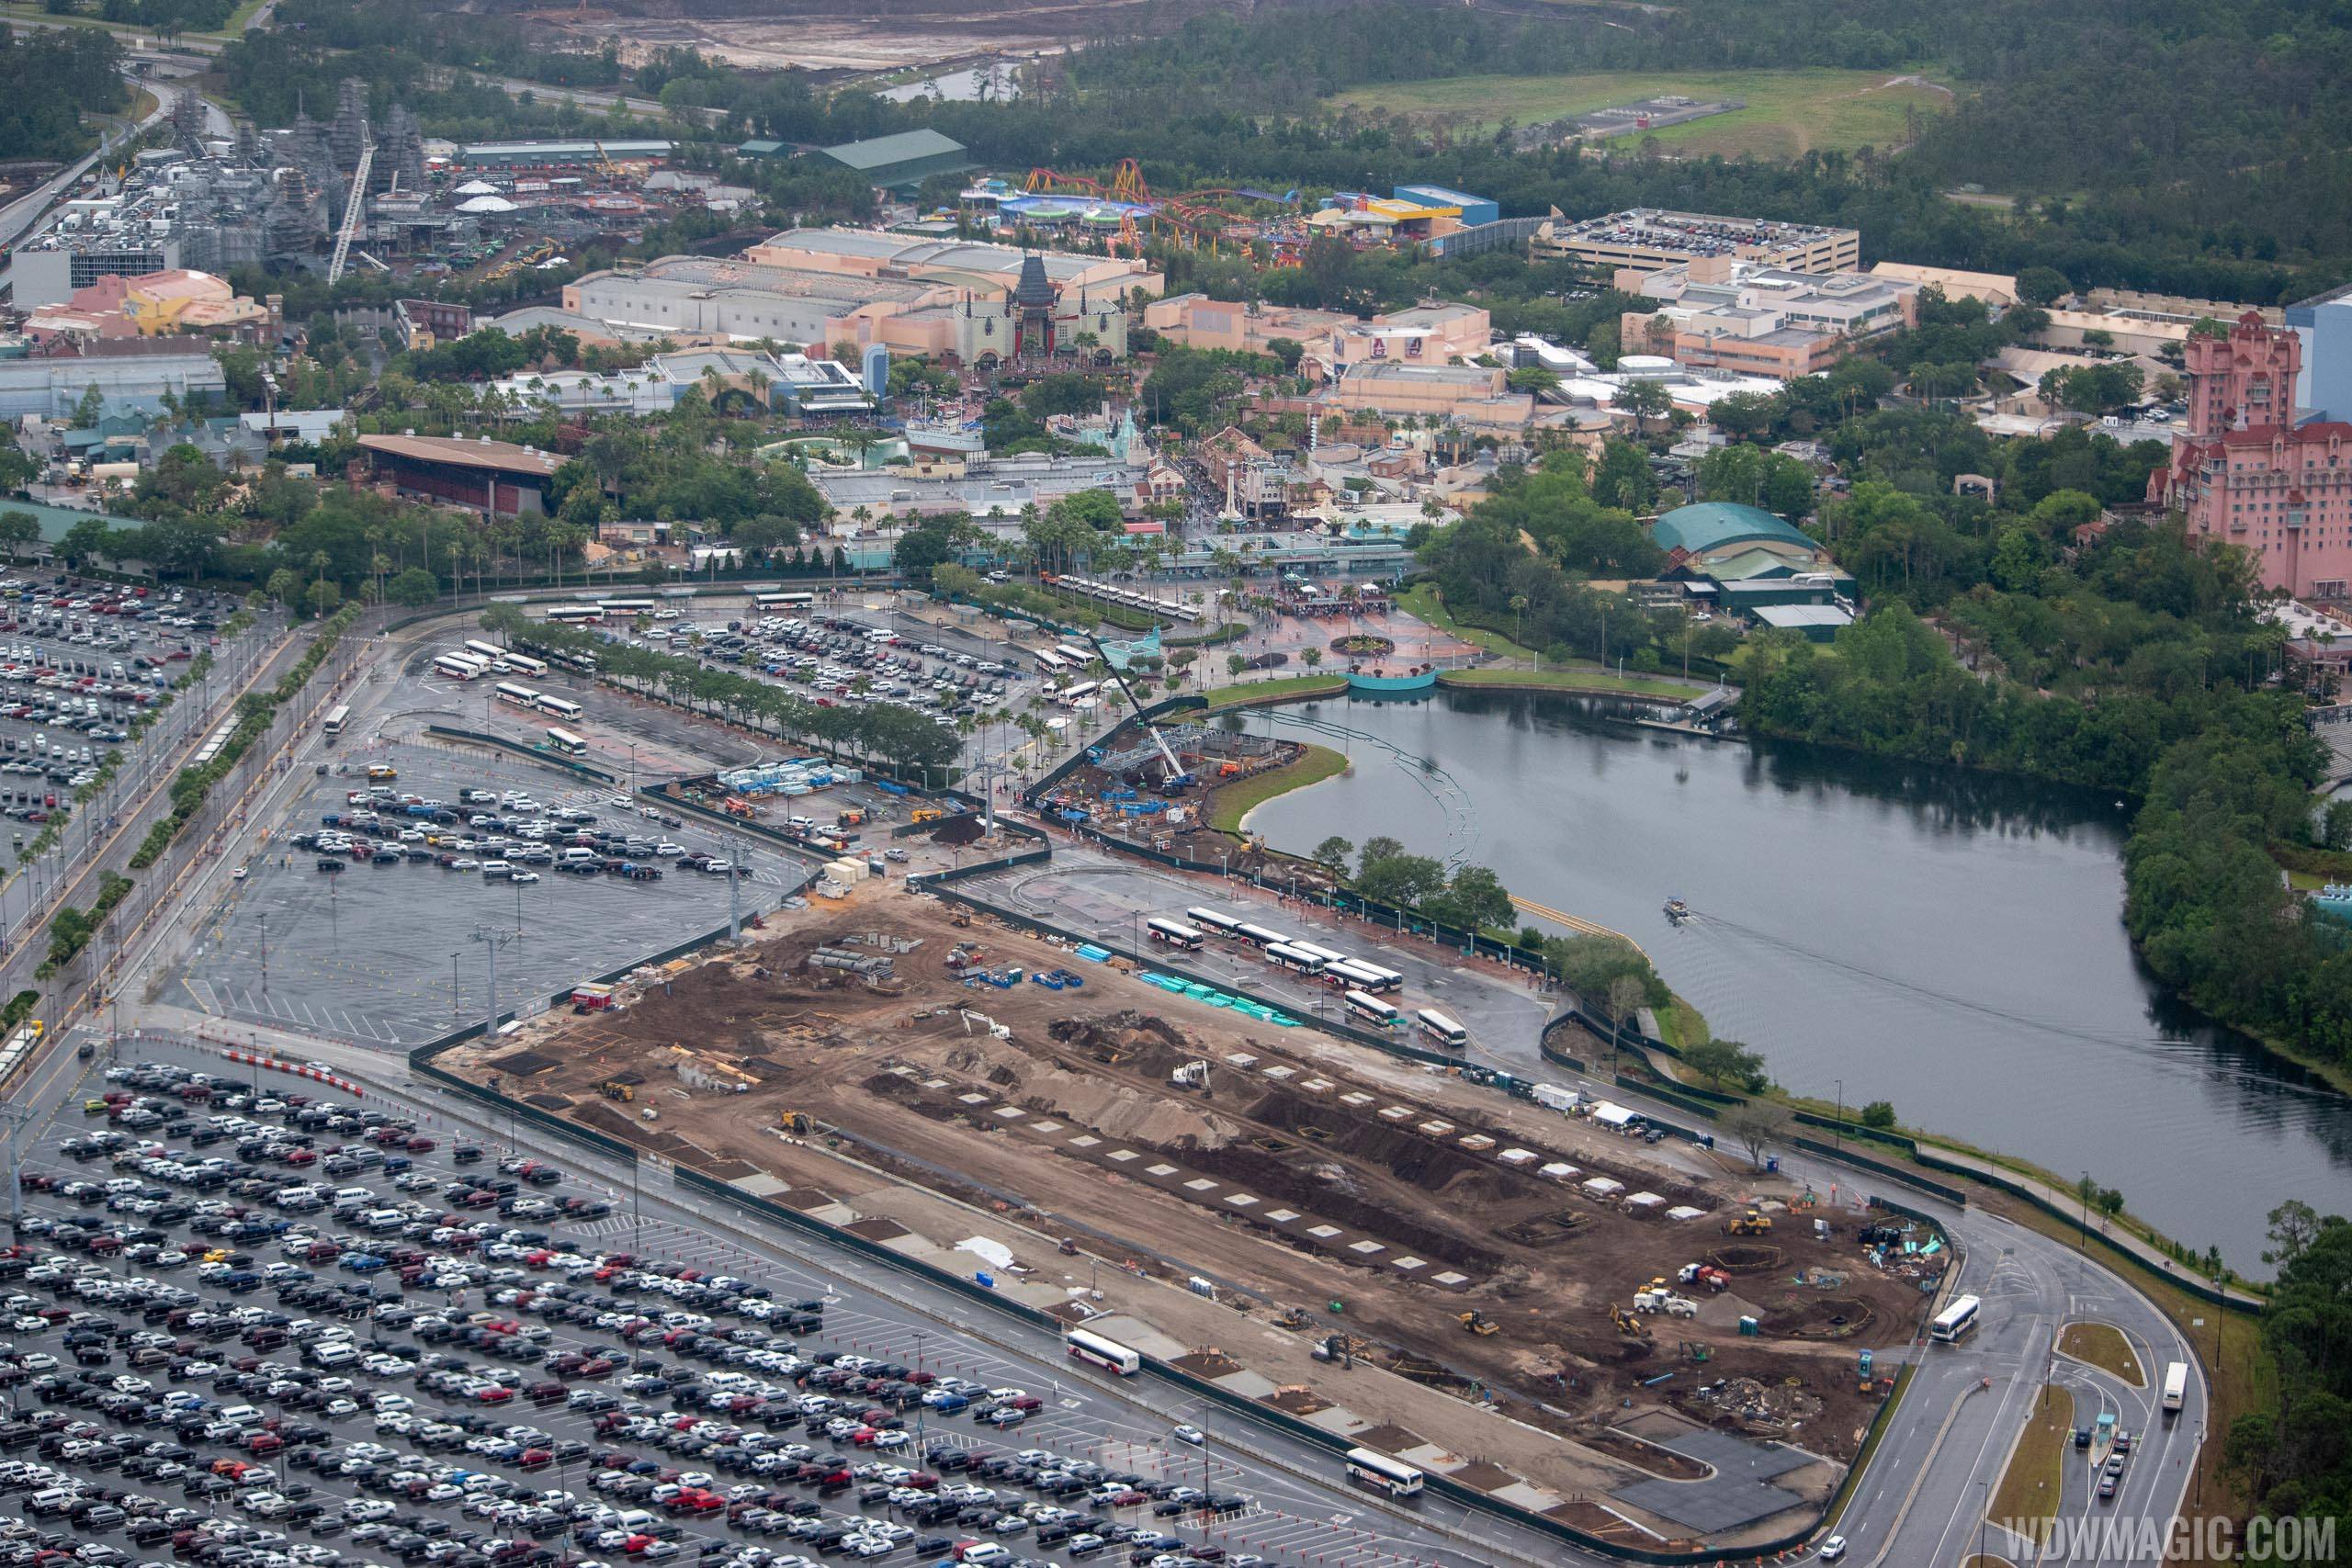 Disney Skyliner construction aerial views - May 2018